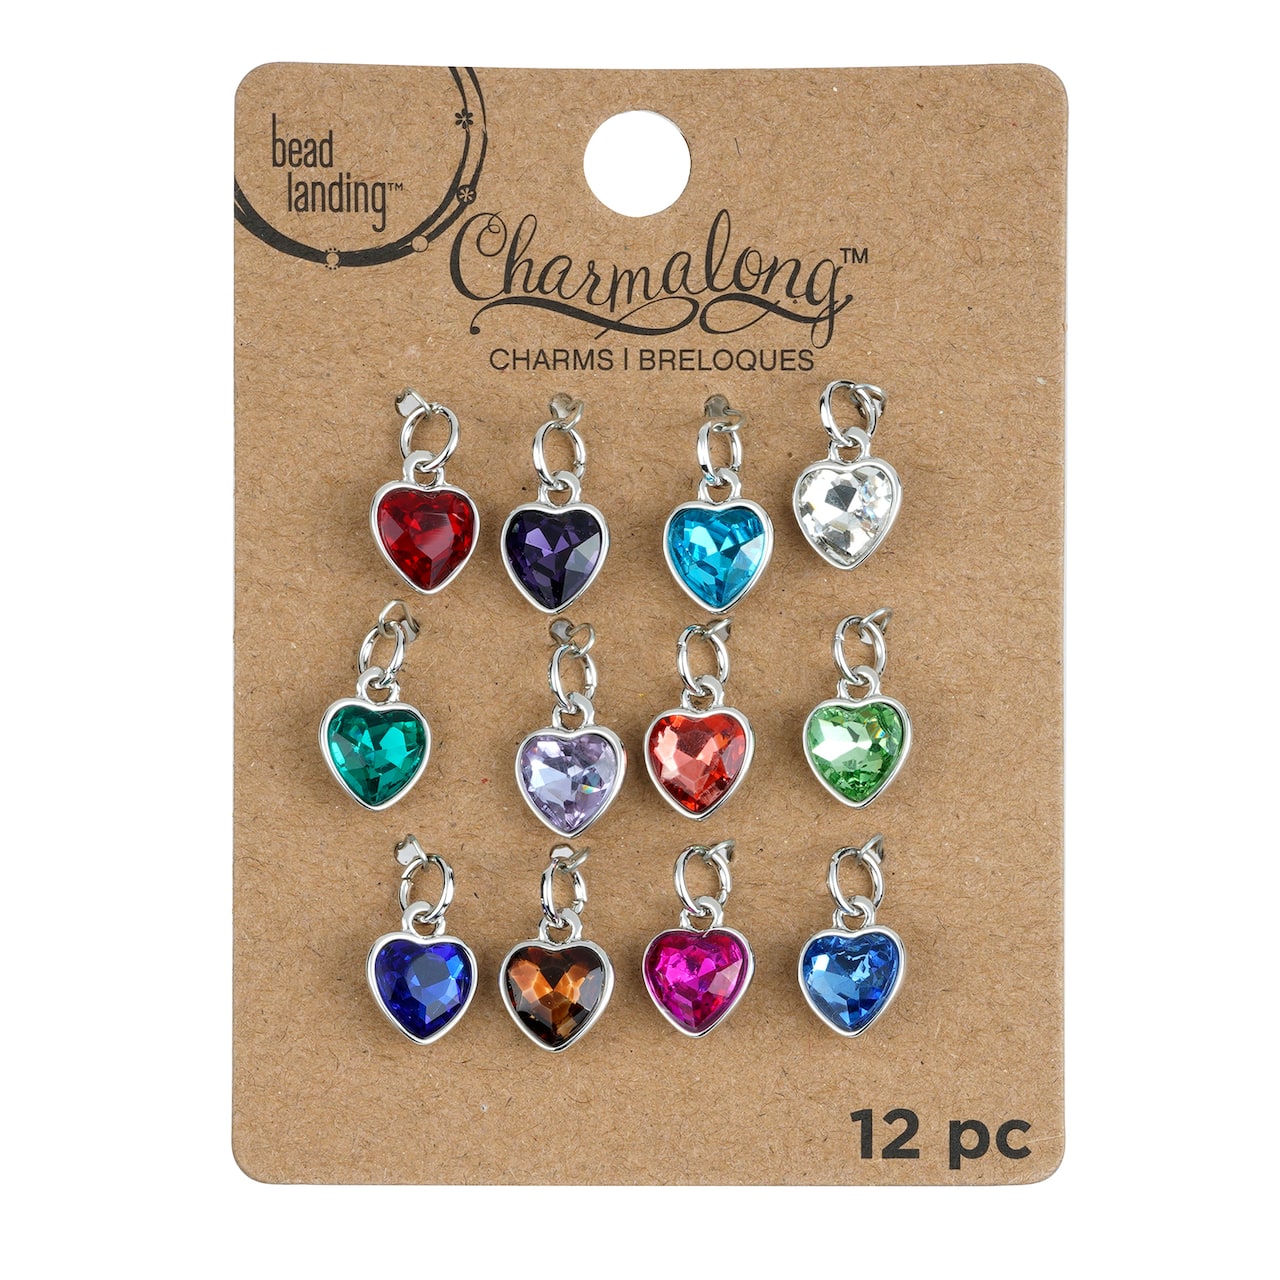 Charmalong™ Rhodium Heart Charms by Bead Landing™